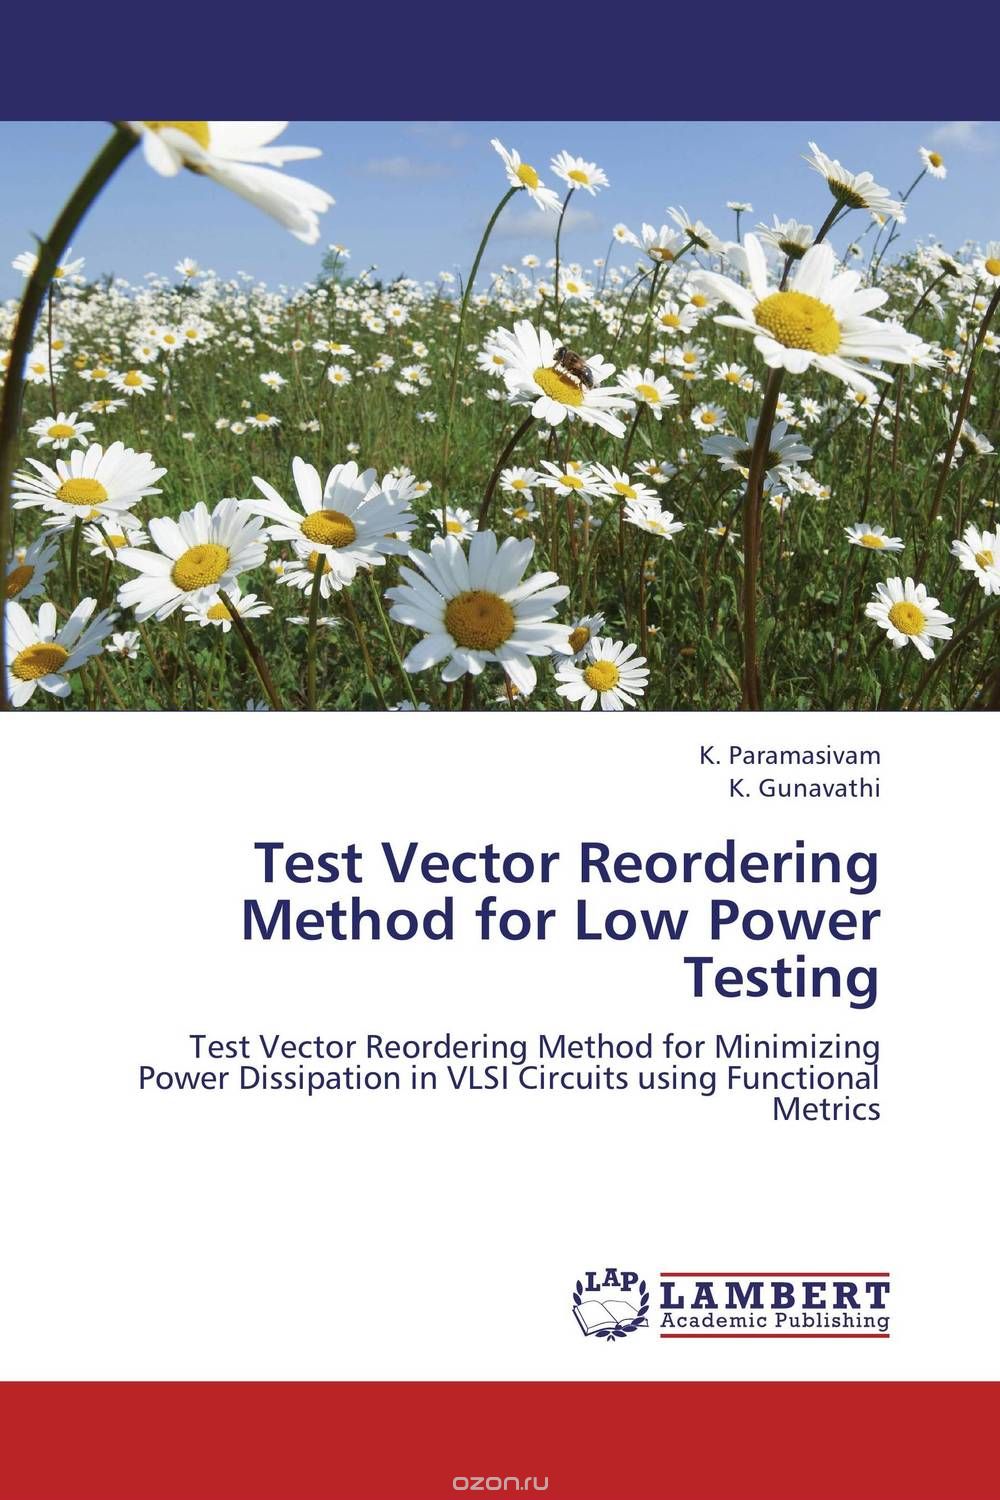 Скачать книгу "Test Vector Reordering Method for  Low Power Testing"